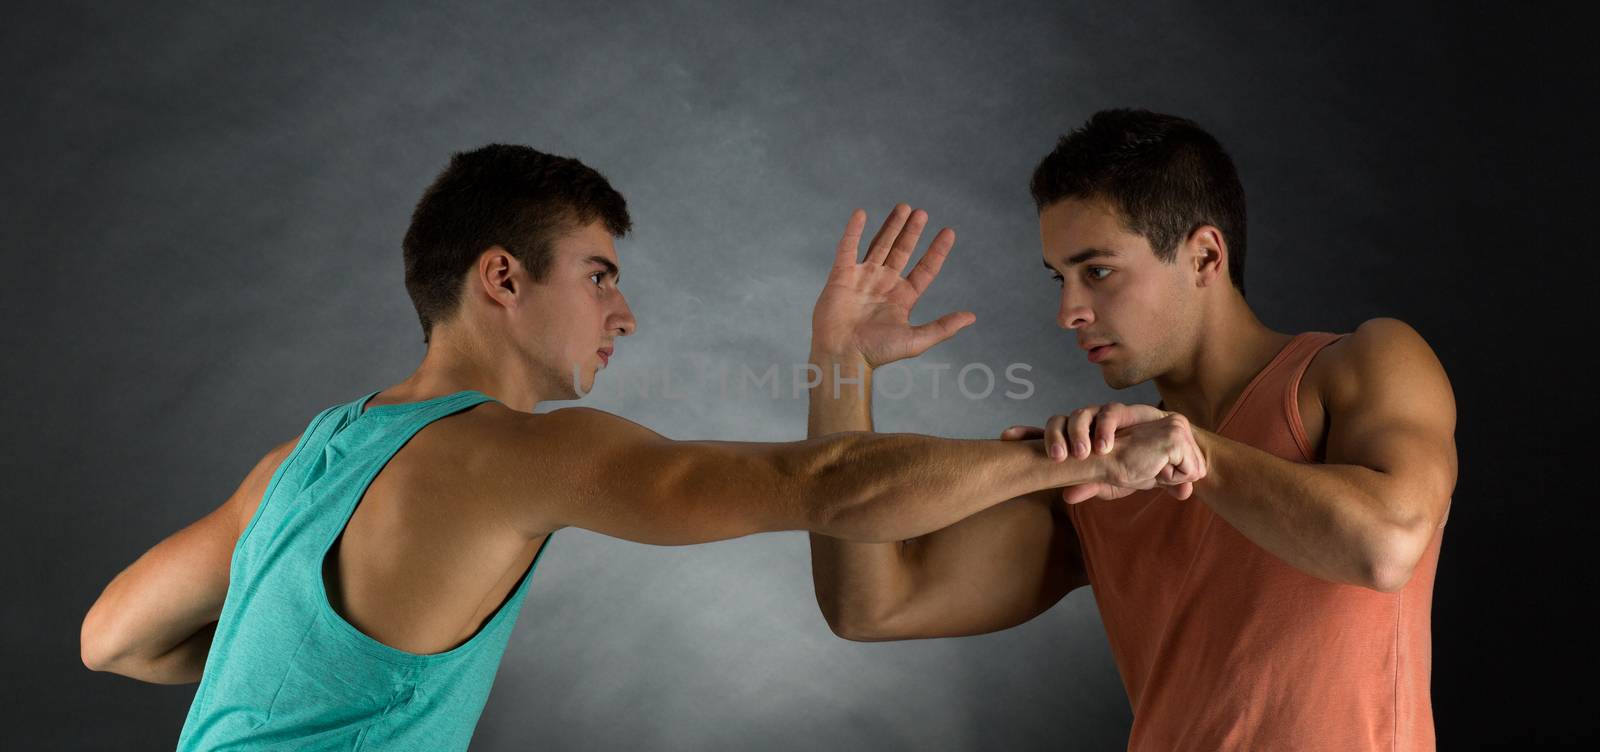 young men wrestling by dolgachov